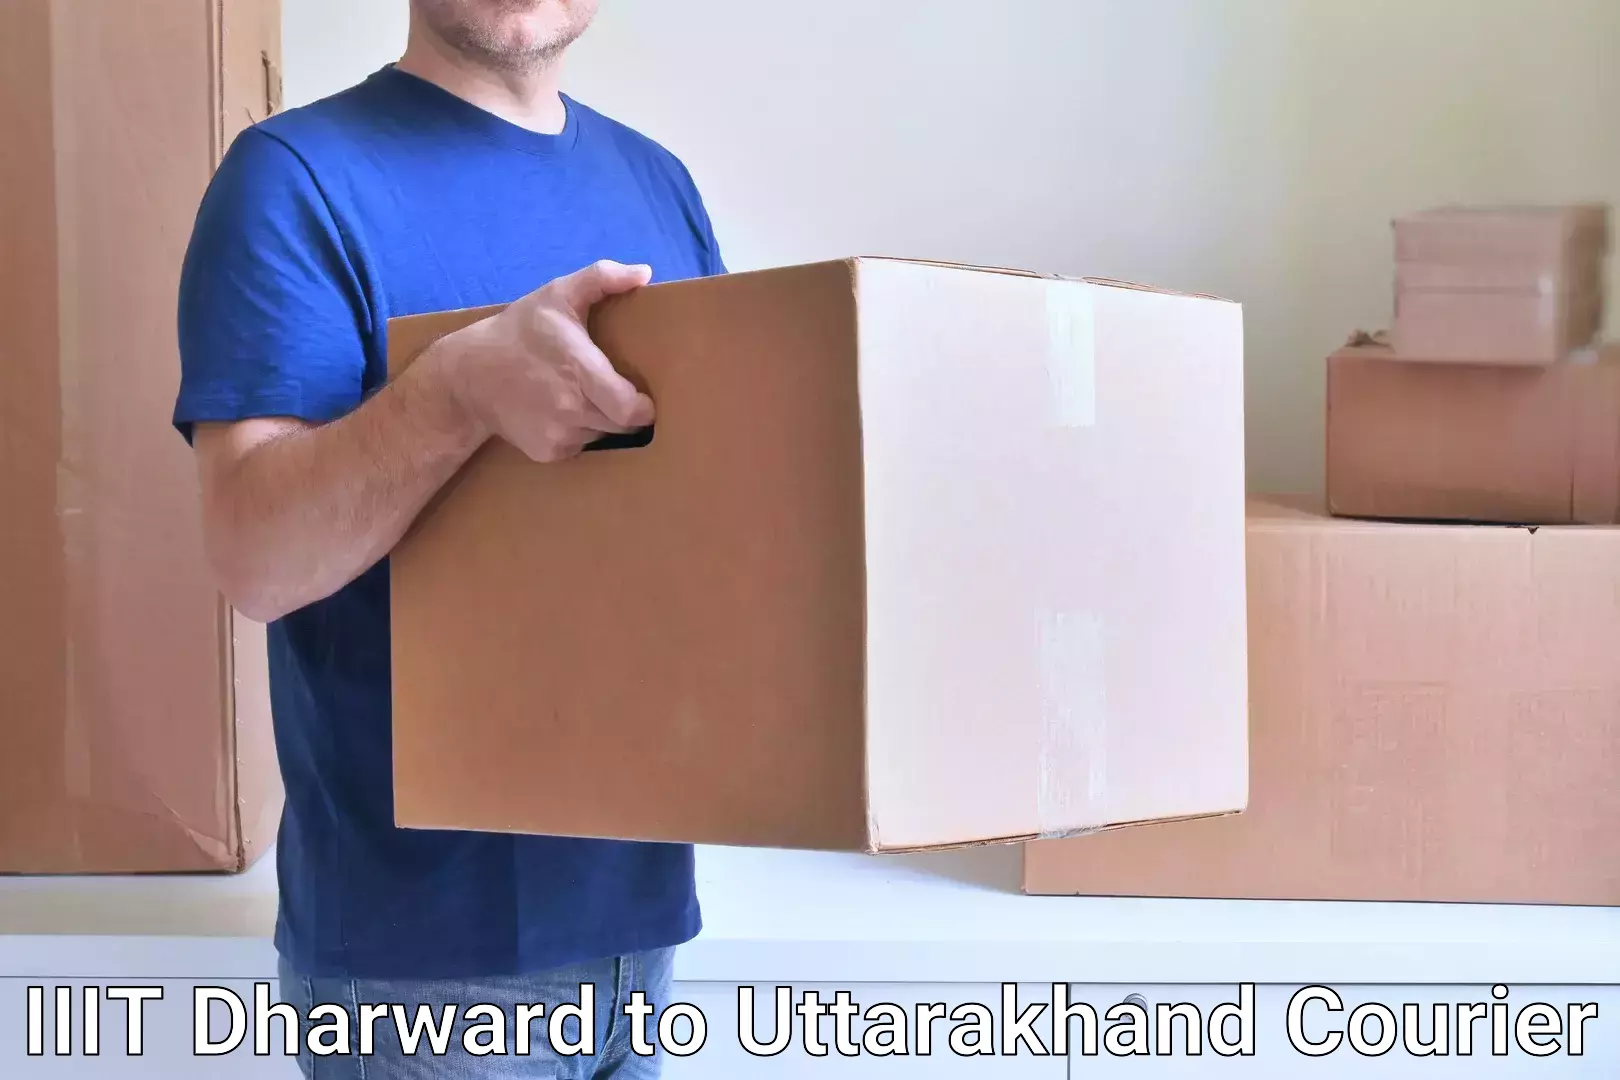 Next-day delivery options IIIT Dharward to Doiwala